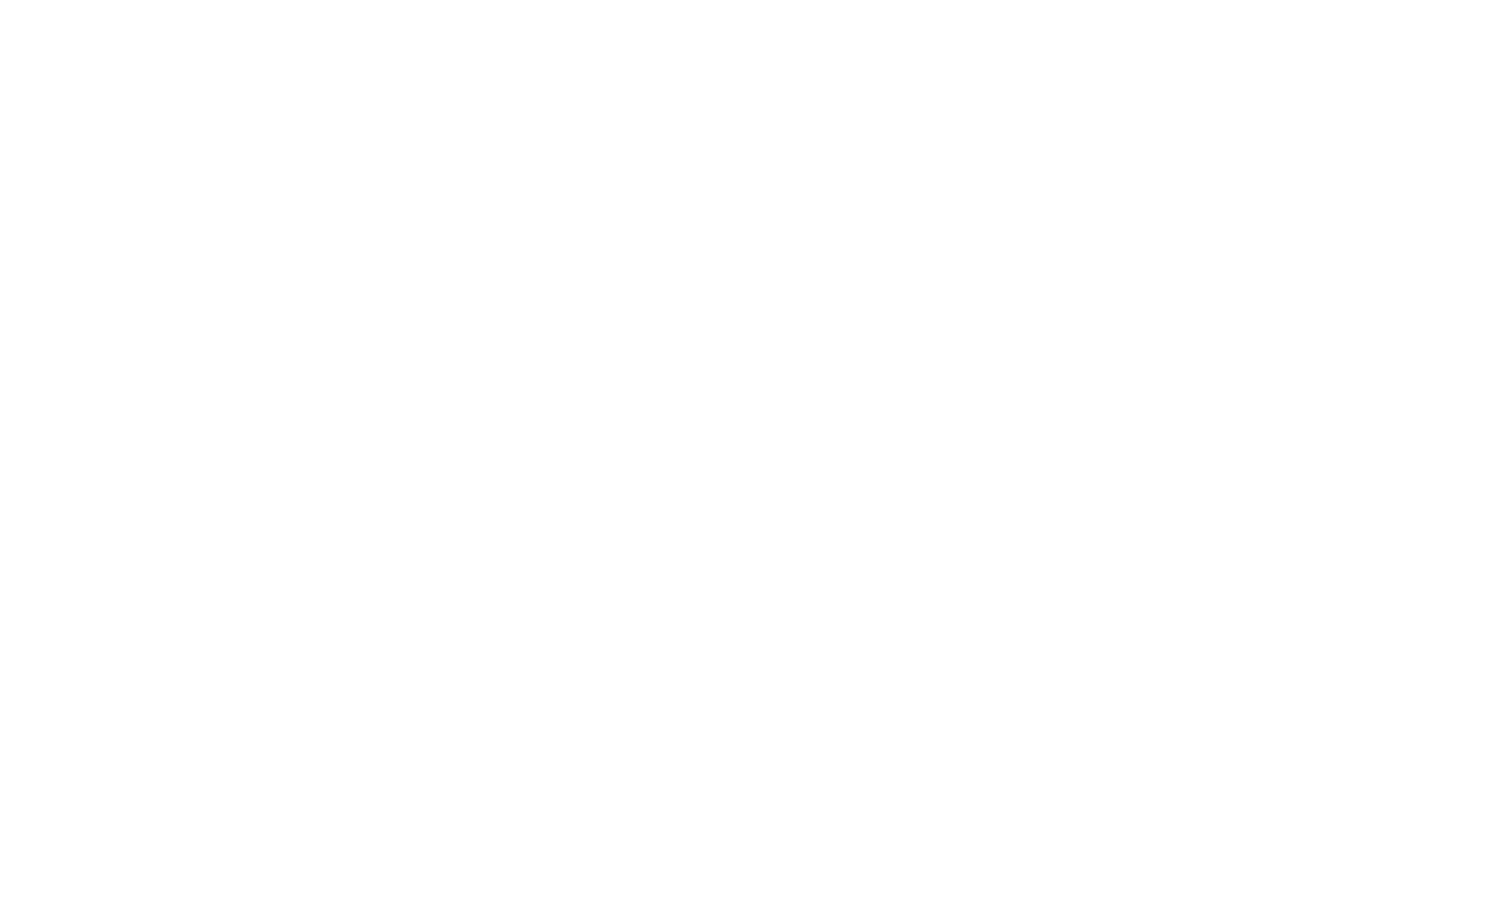 Creative Reaction Lab